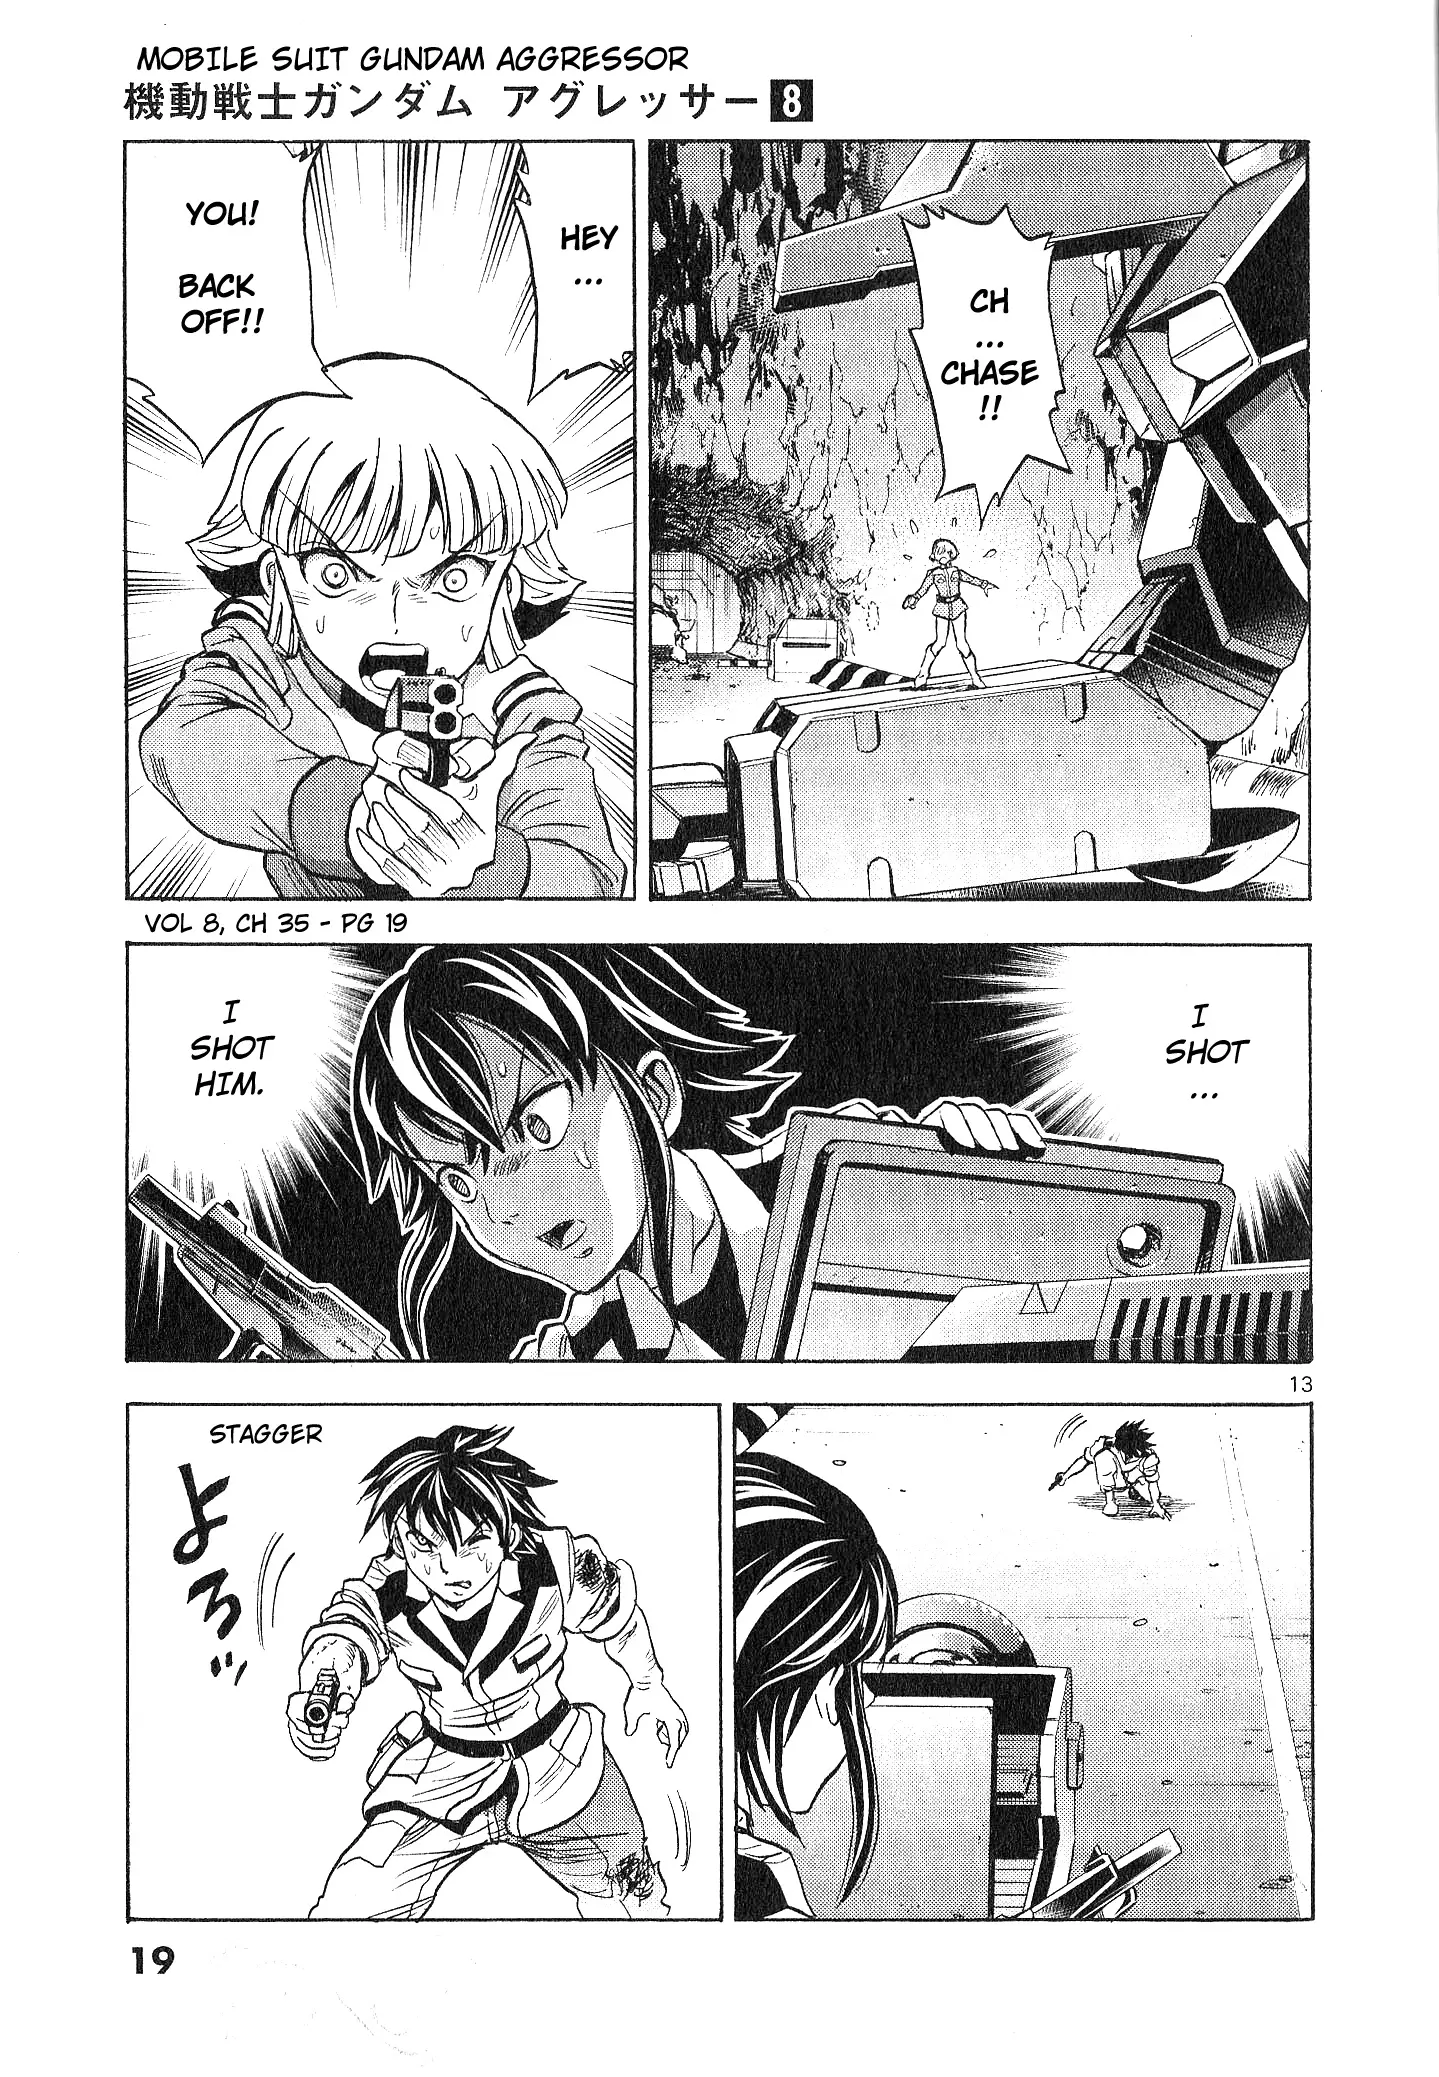 Mobile Suit Gundam Aggressor - 35 page 14-43221ad3